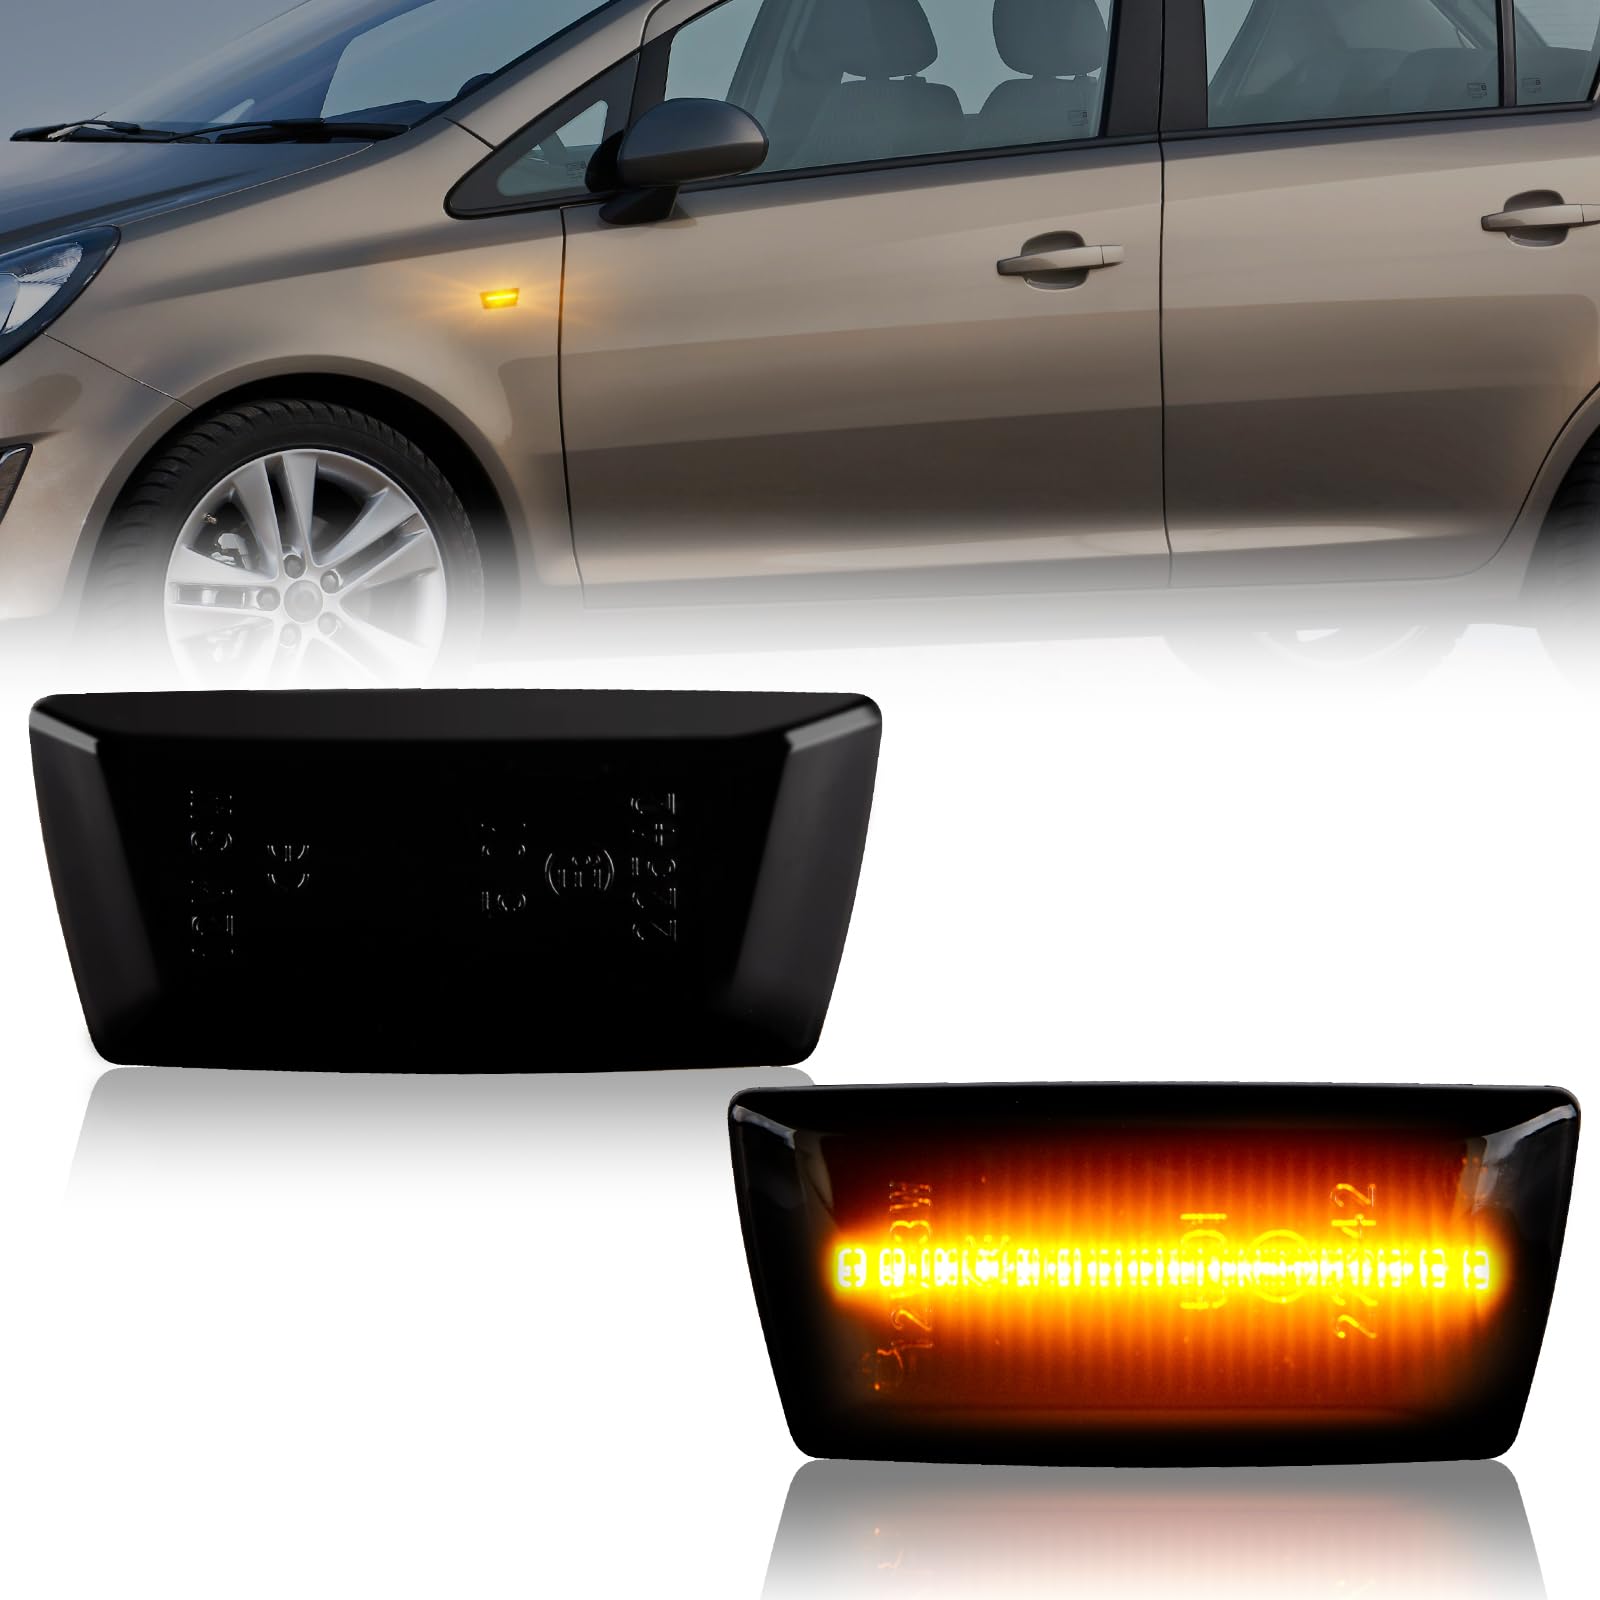 OZ-LAMPE LED Blinker Seitenblinker für Opel/Vauxhall Adam Astra H Corsa D E Insigina A Meriua B Zafira B,Blinker mit Canbus,Fehlerfrei Schwarz von OZ-LAMPE